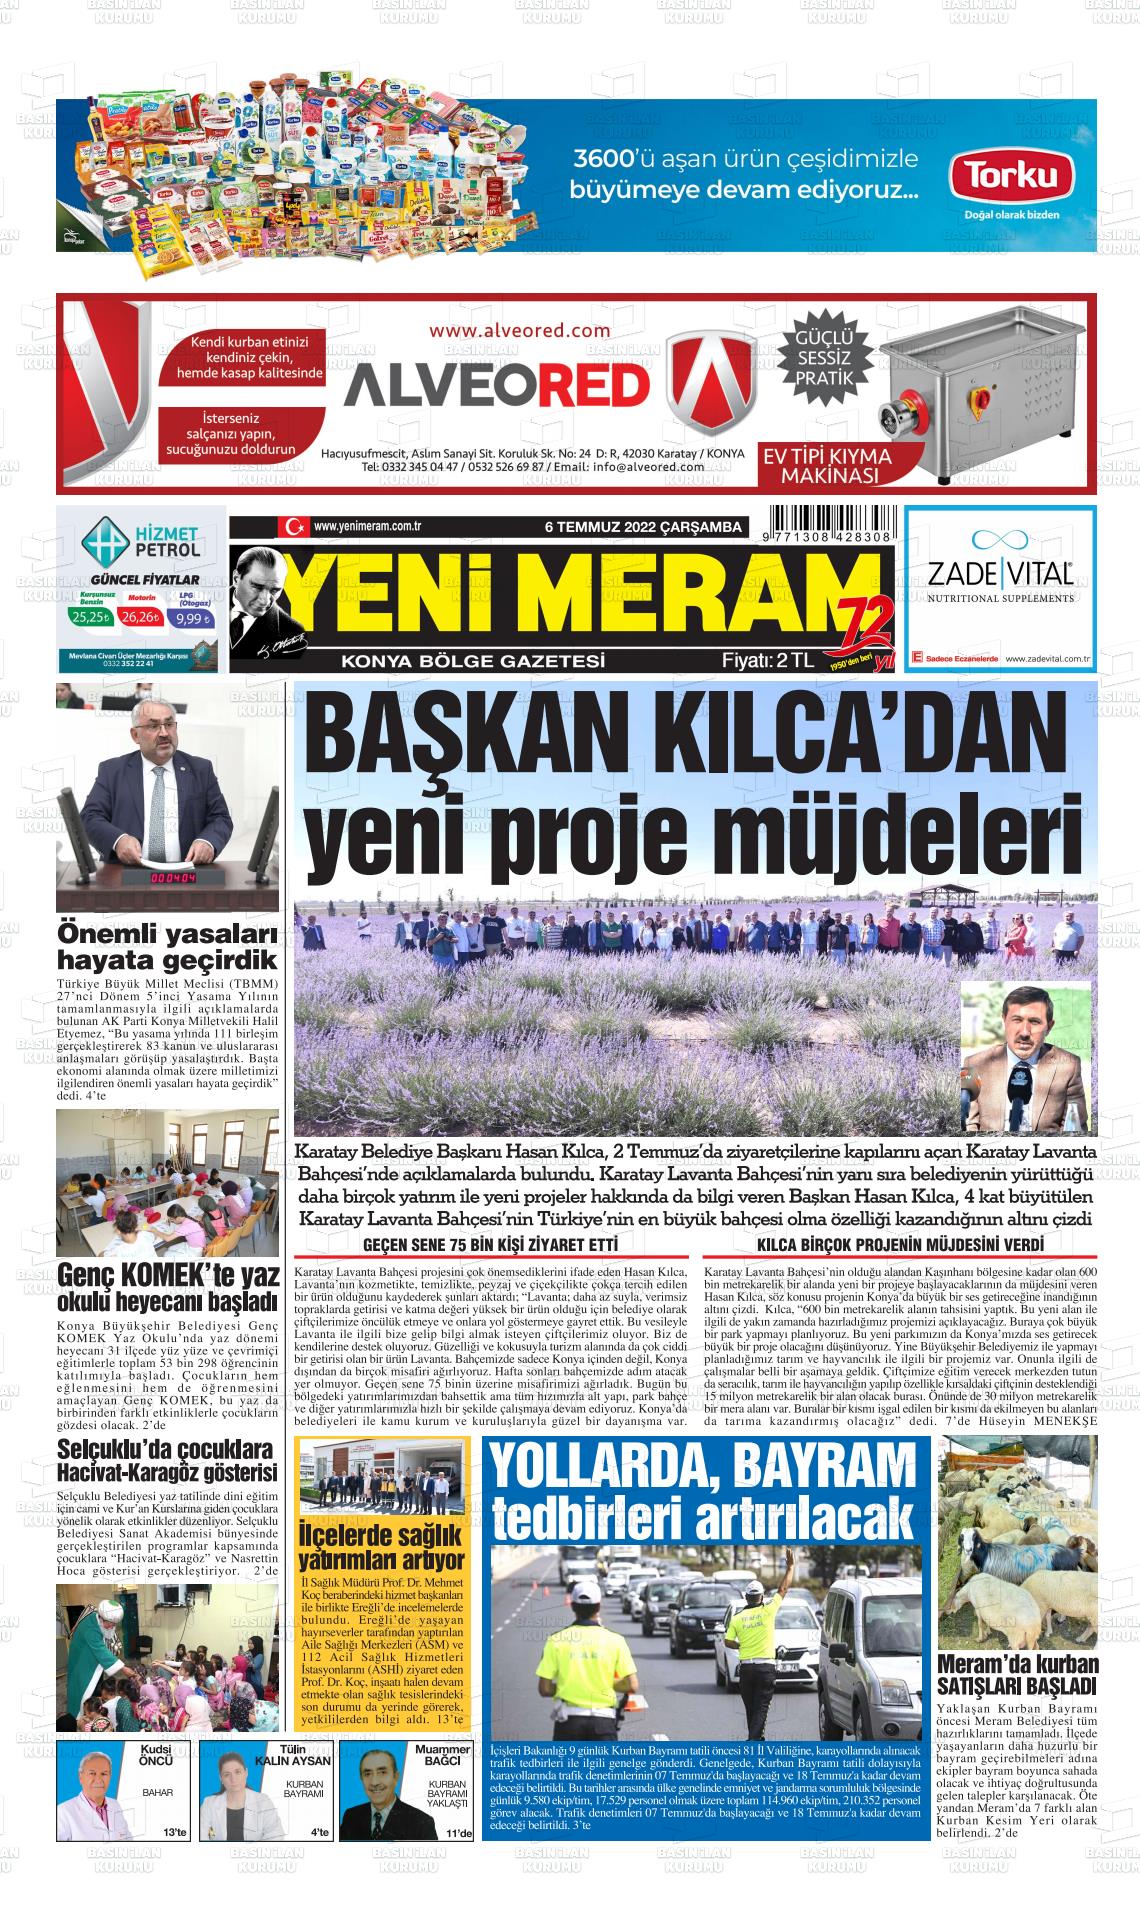 06 Temmuz 2022 Yeni Meram Gazete Manşeti